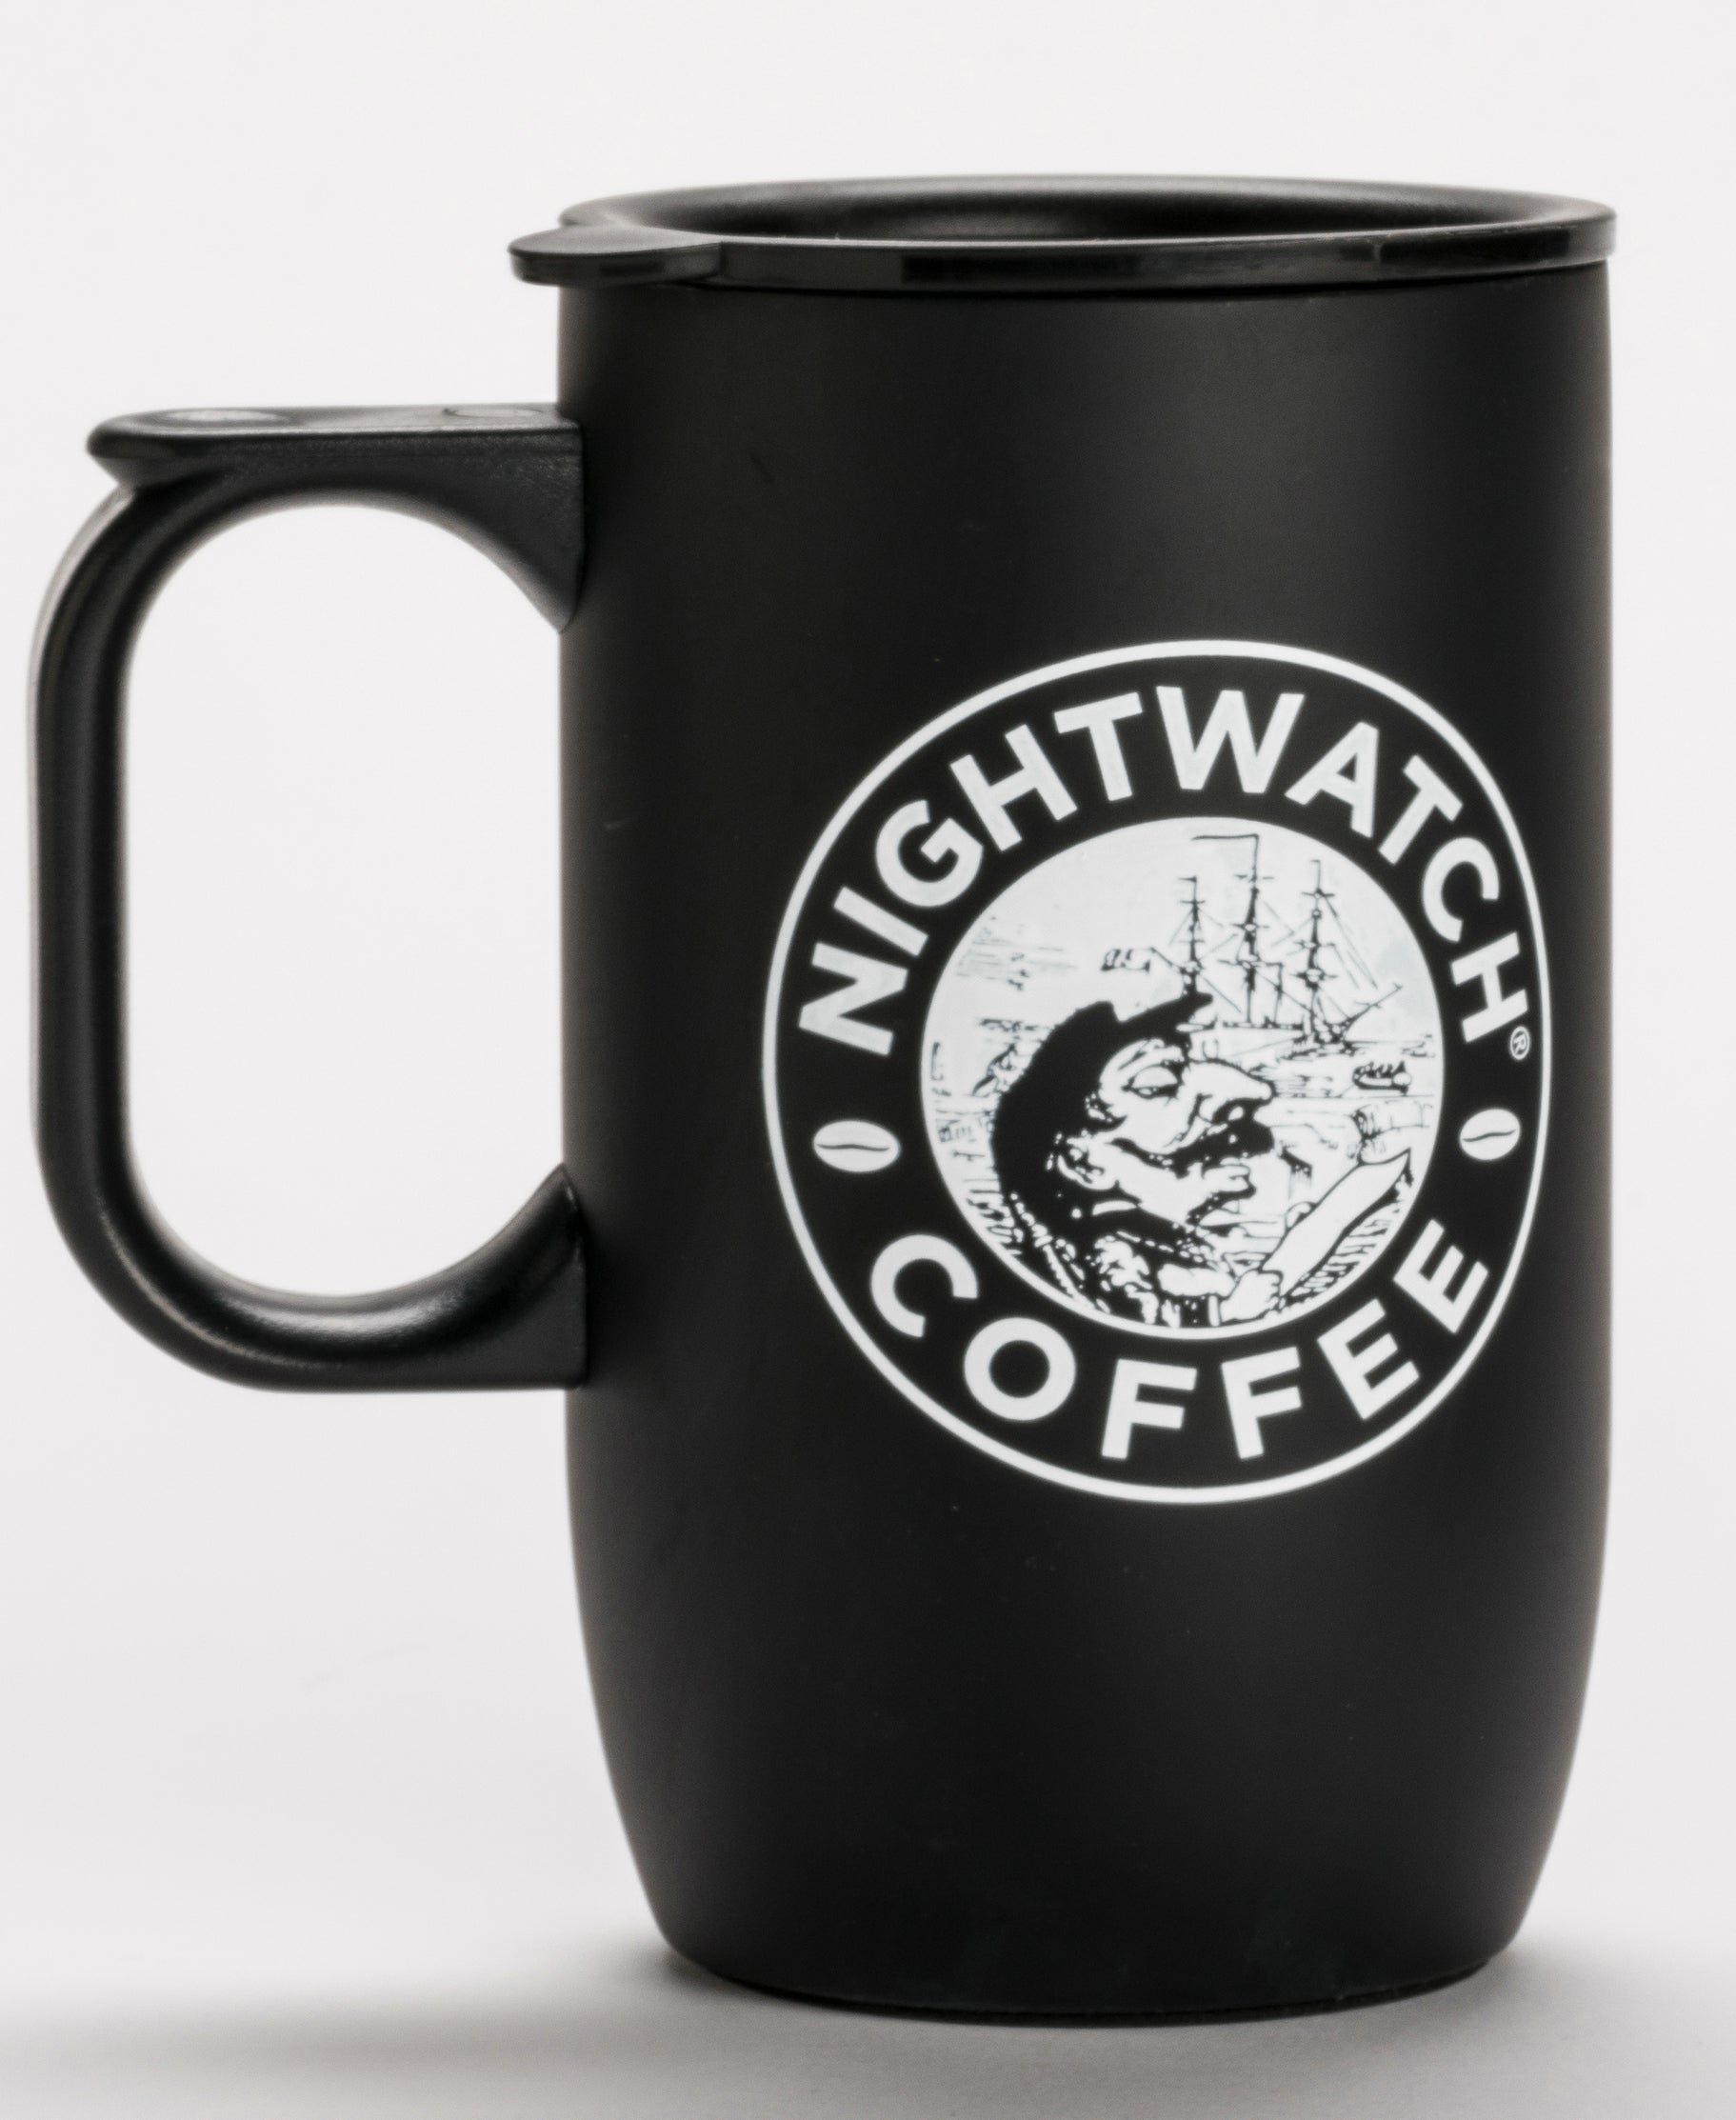 10 oz. Black NightWatch® Coffee Mug - Nightwatch Coffee Company